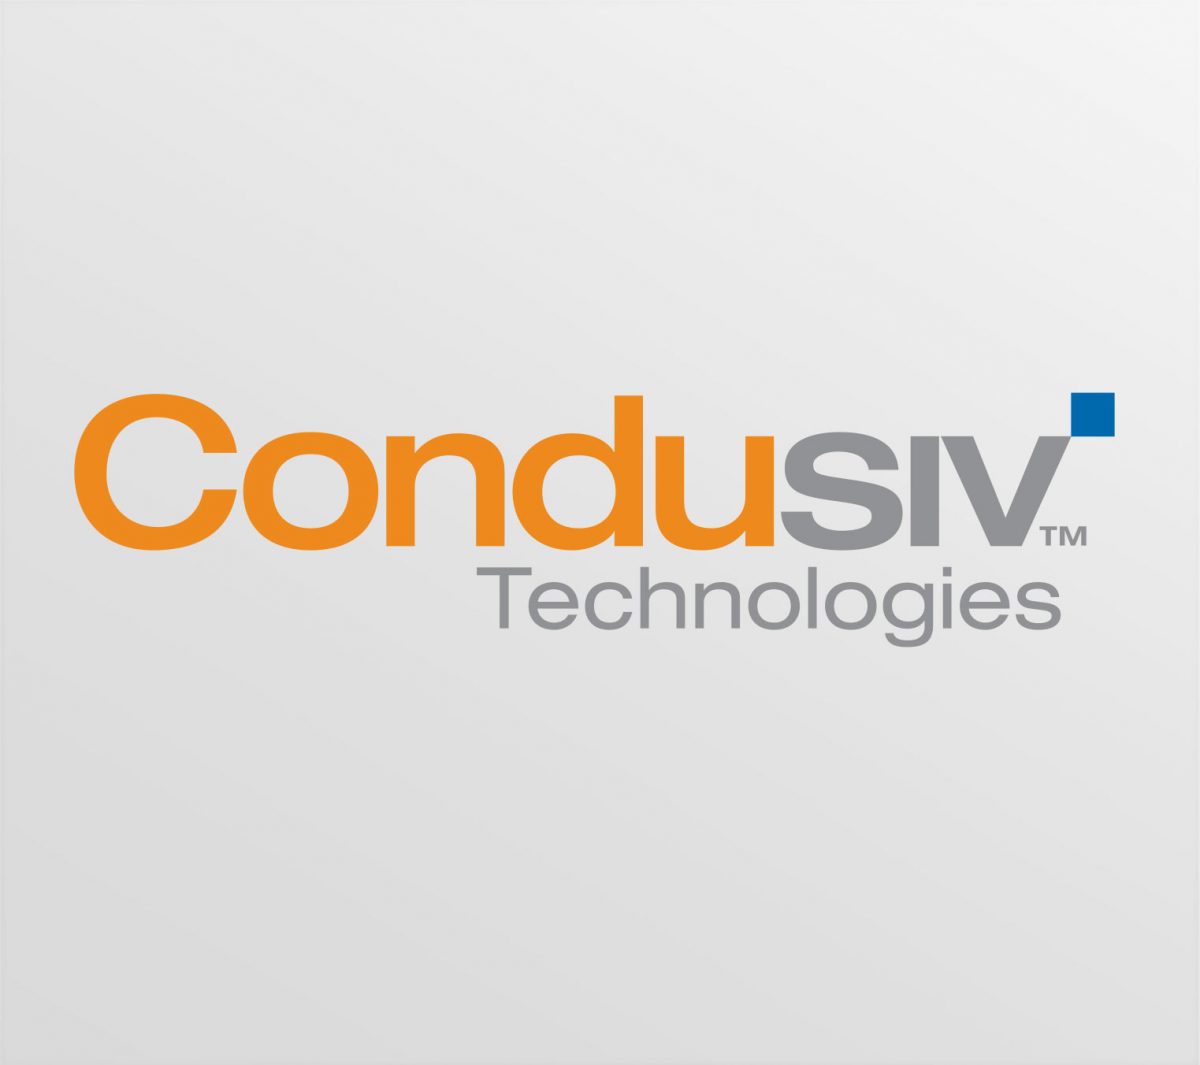 Image of new corporate Identity logo developed for Tech company Condusiv Technologies